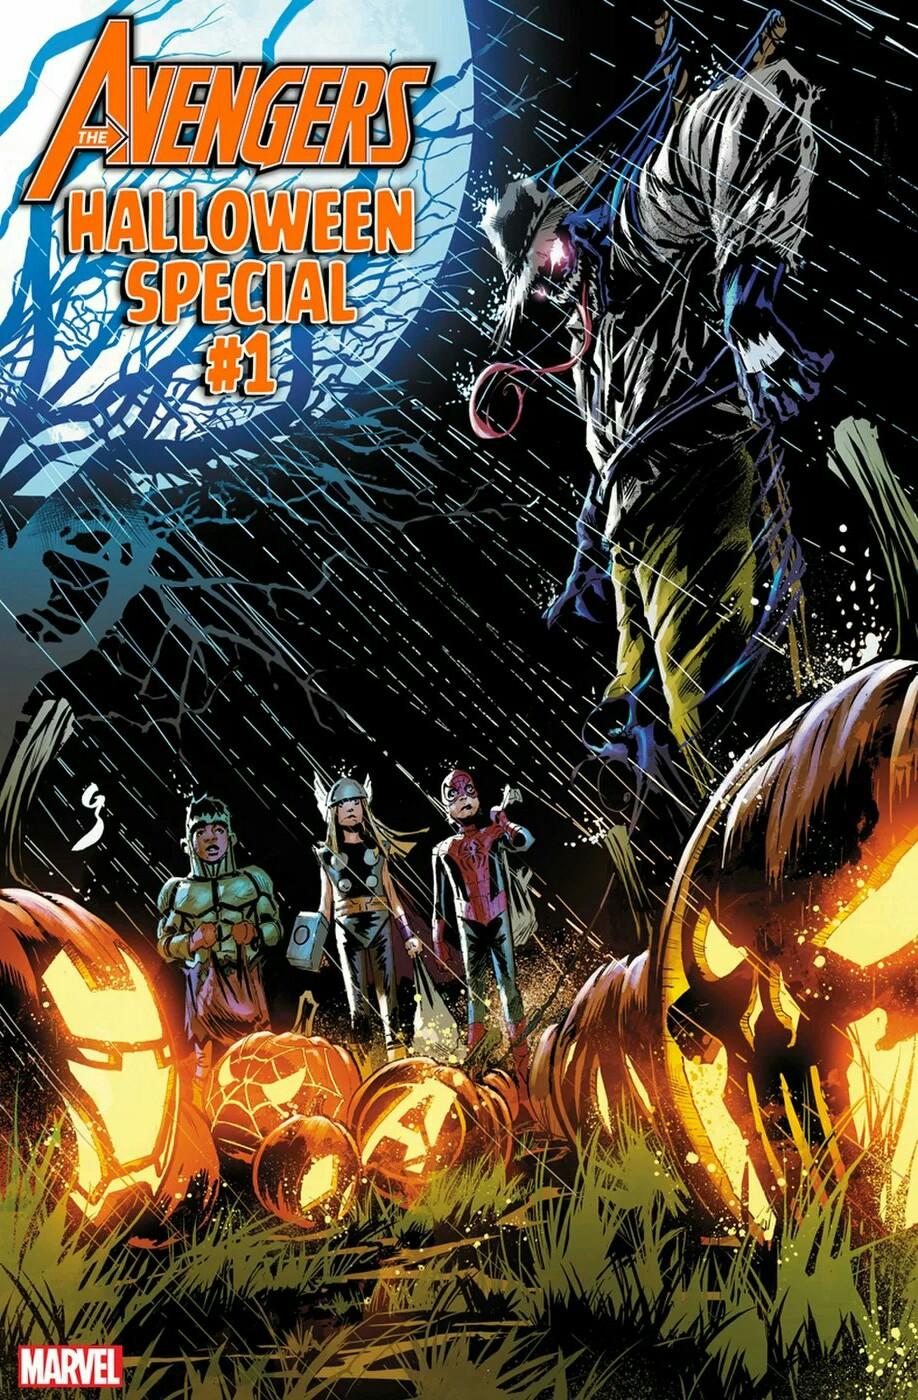 Avengers Halloween Special Vol. 1 #1